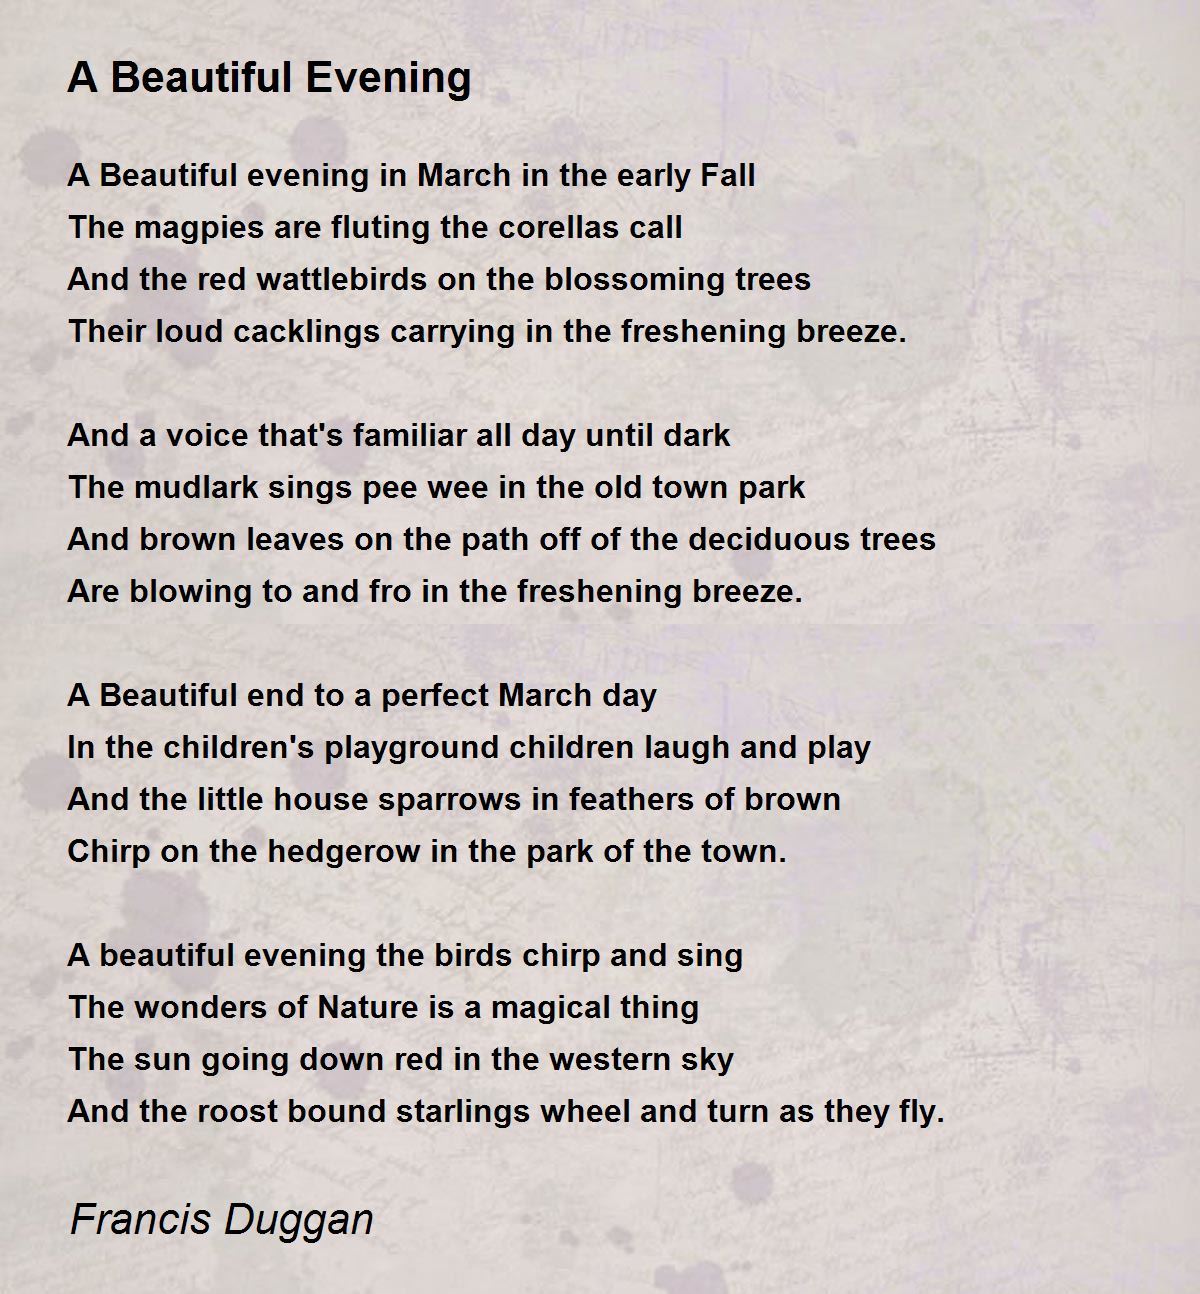 A Beautiful Evening - A Beautiful Evening Poem by Francis Duggan